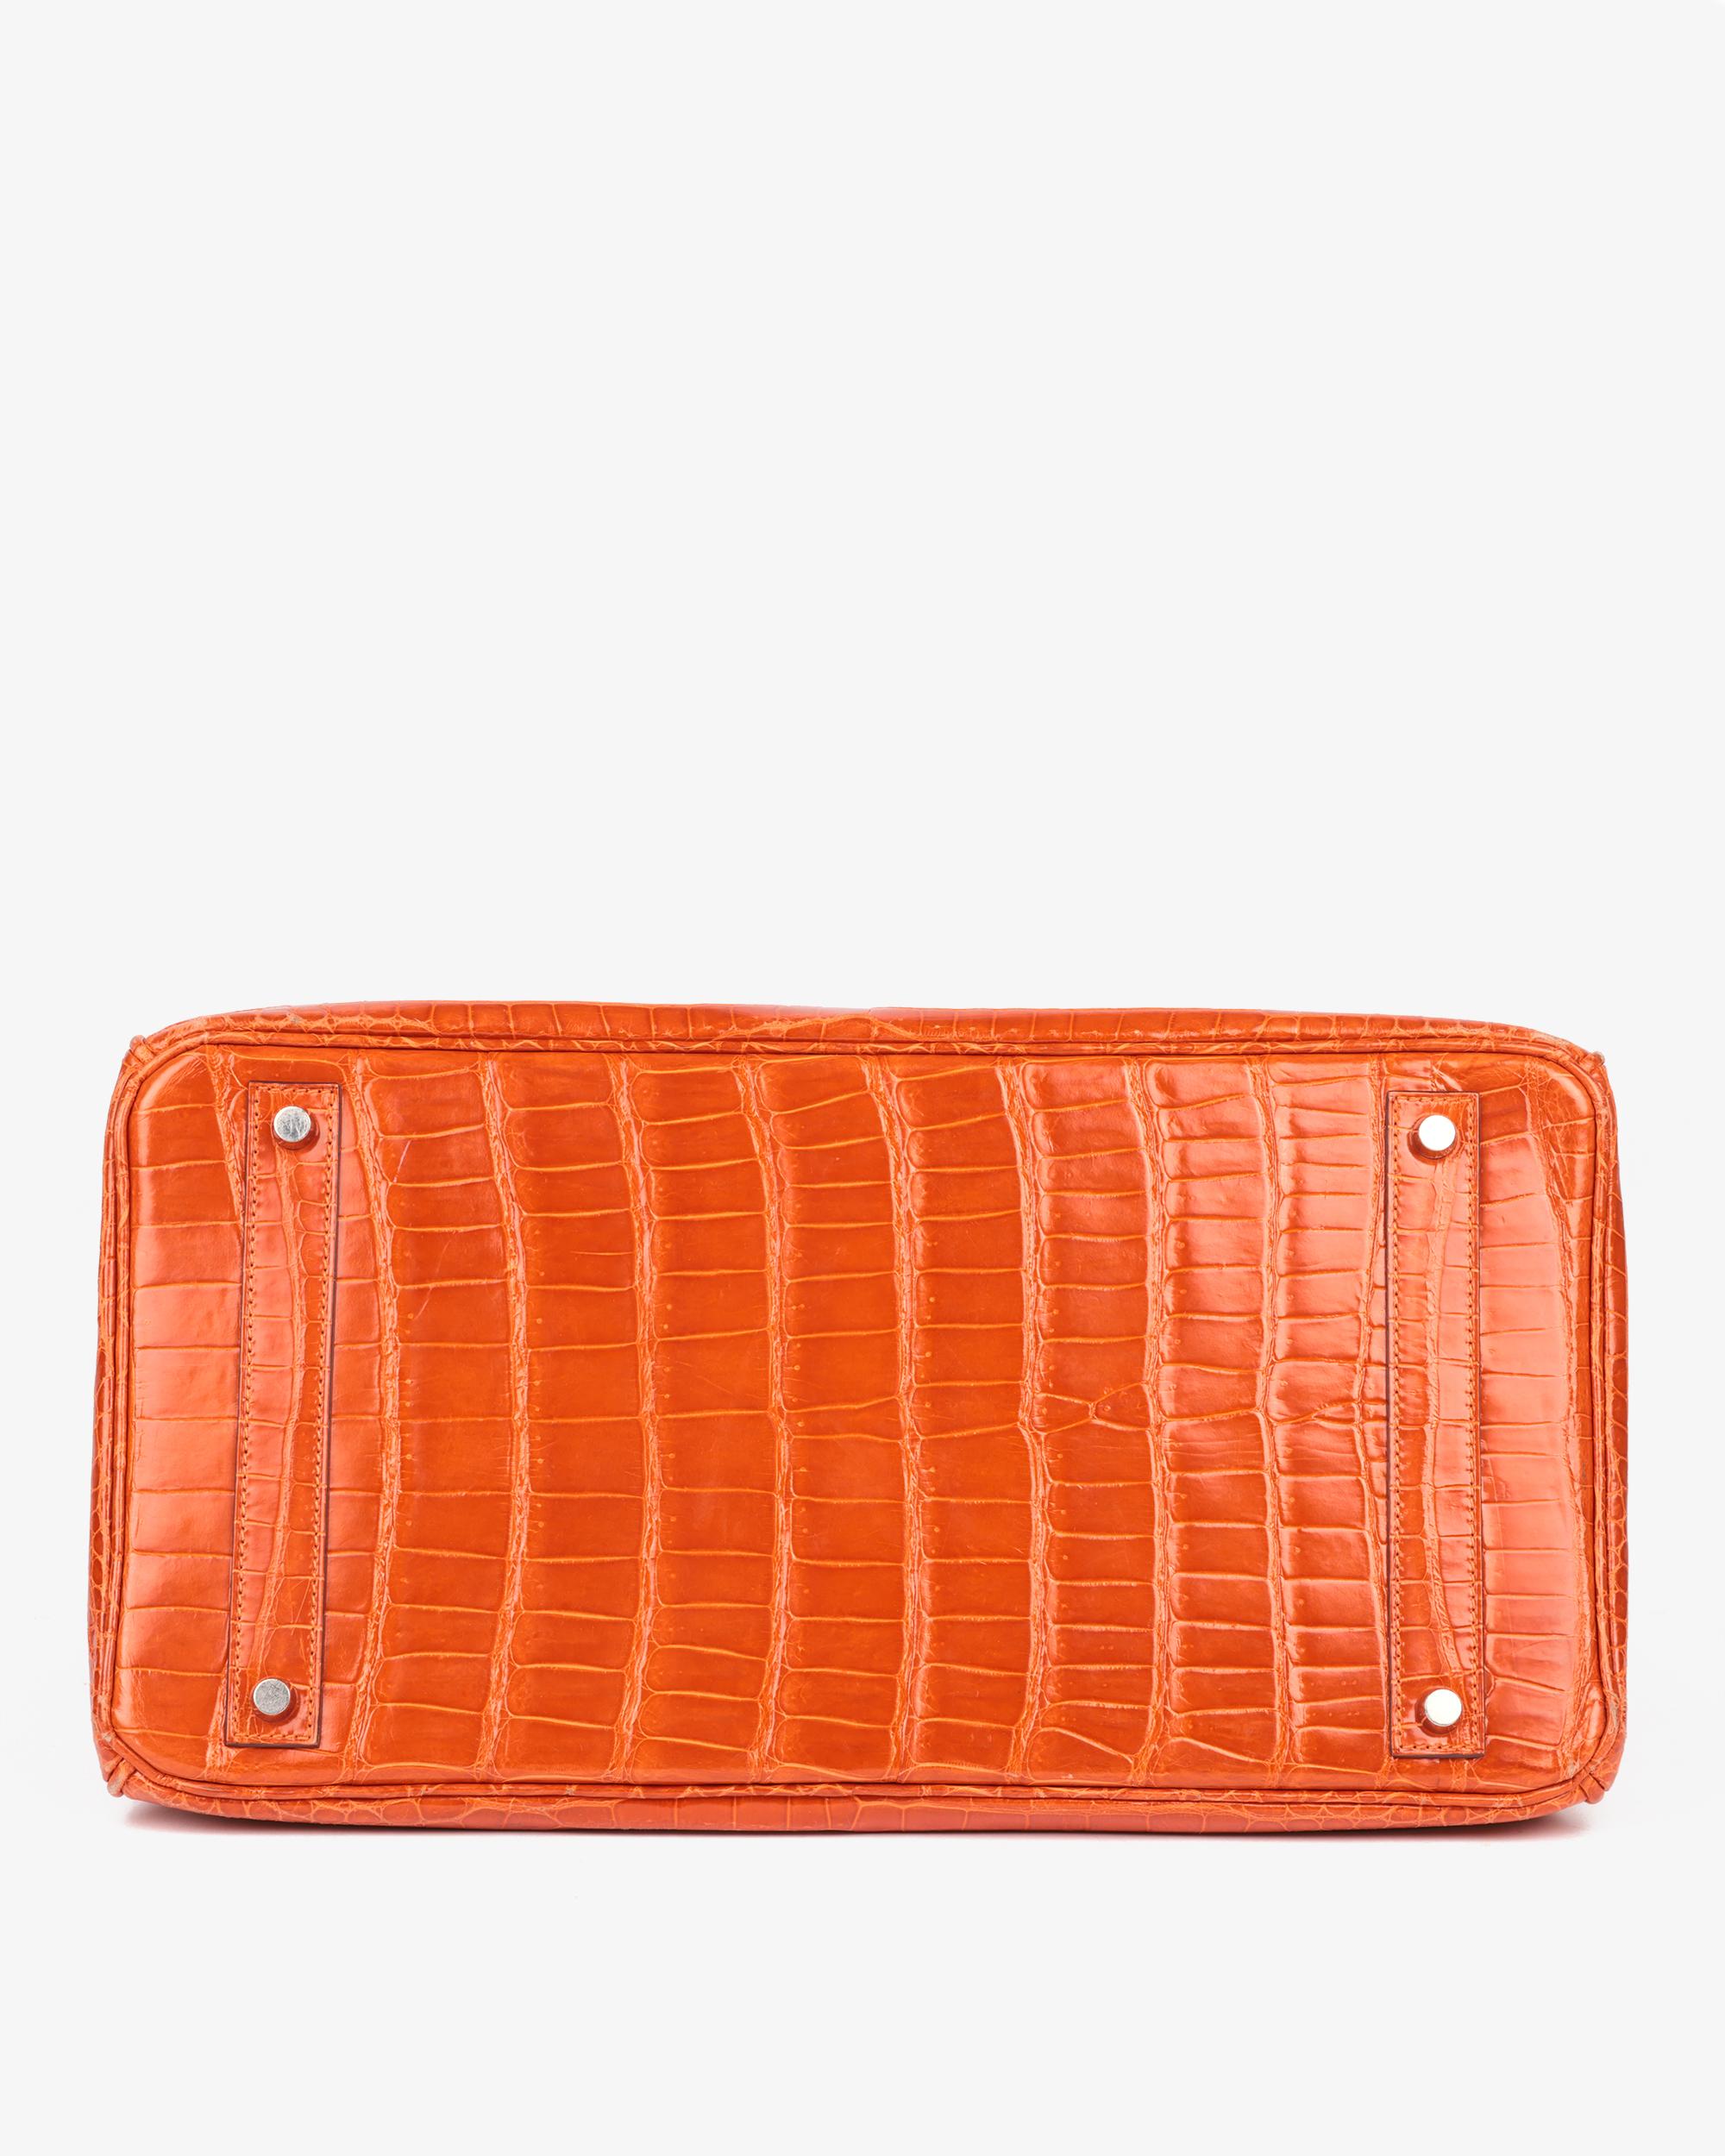 Hermès Orange Glänzend Porosus Krokodil Leder Birkin 40cm im Angebot 1